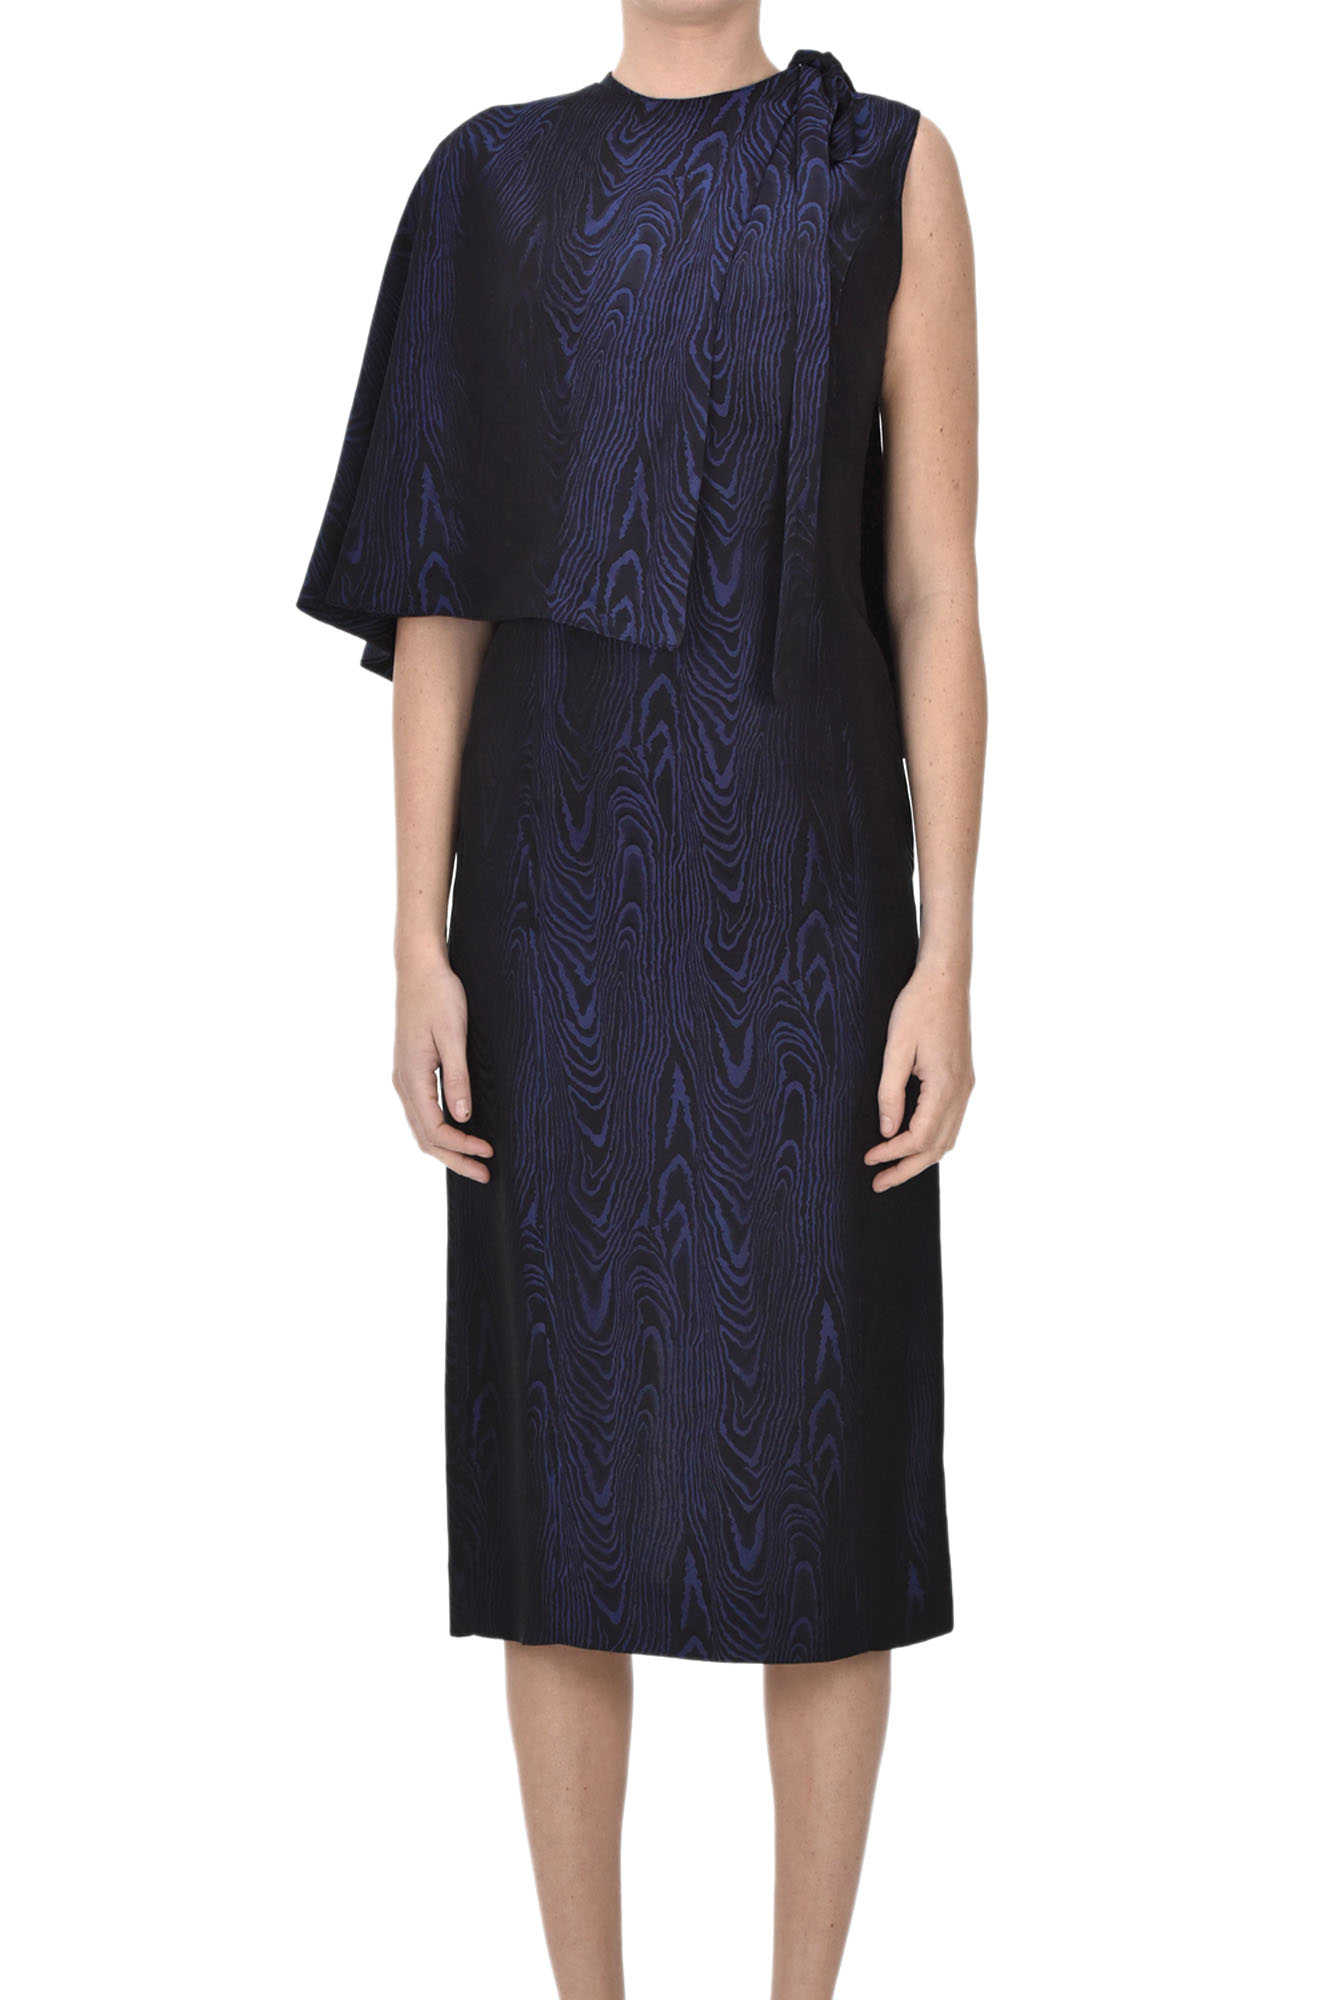 Maria De La Orden Jacquard Fabric Dress In Navy Blue